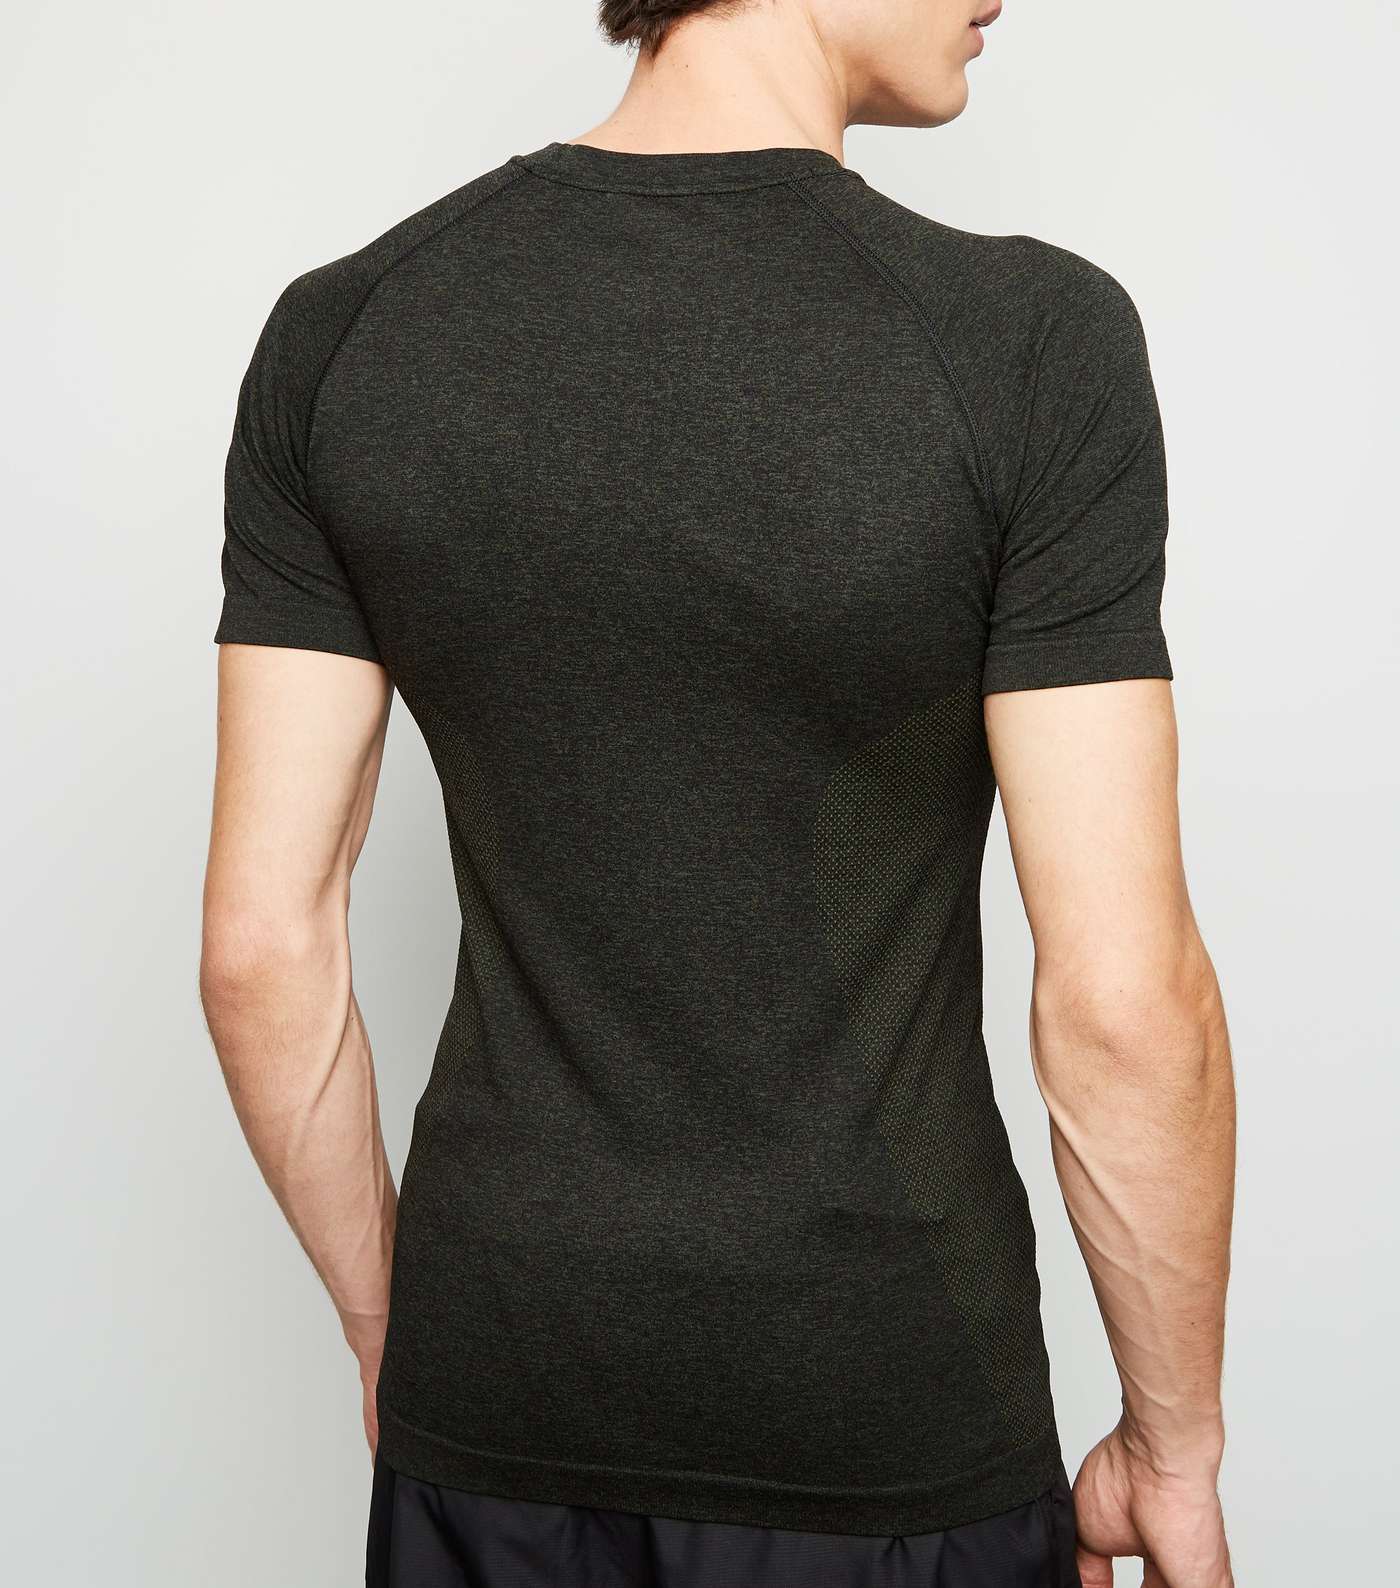 Khaki Raglan Sleeve Muscle Fit Sports T-Shirt   Image 3